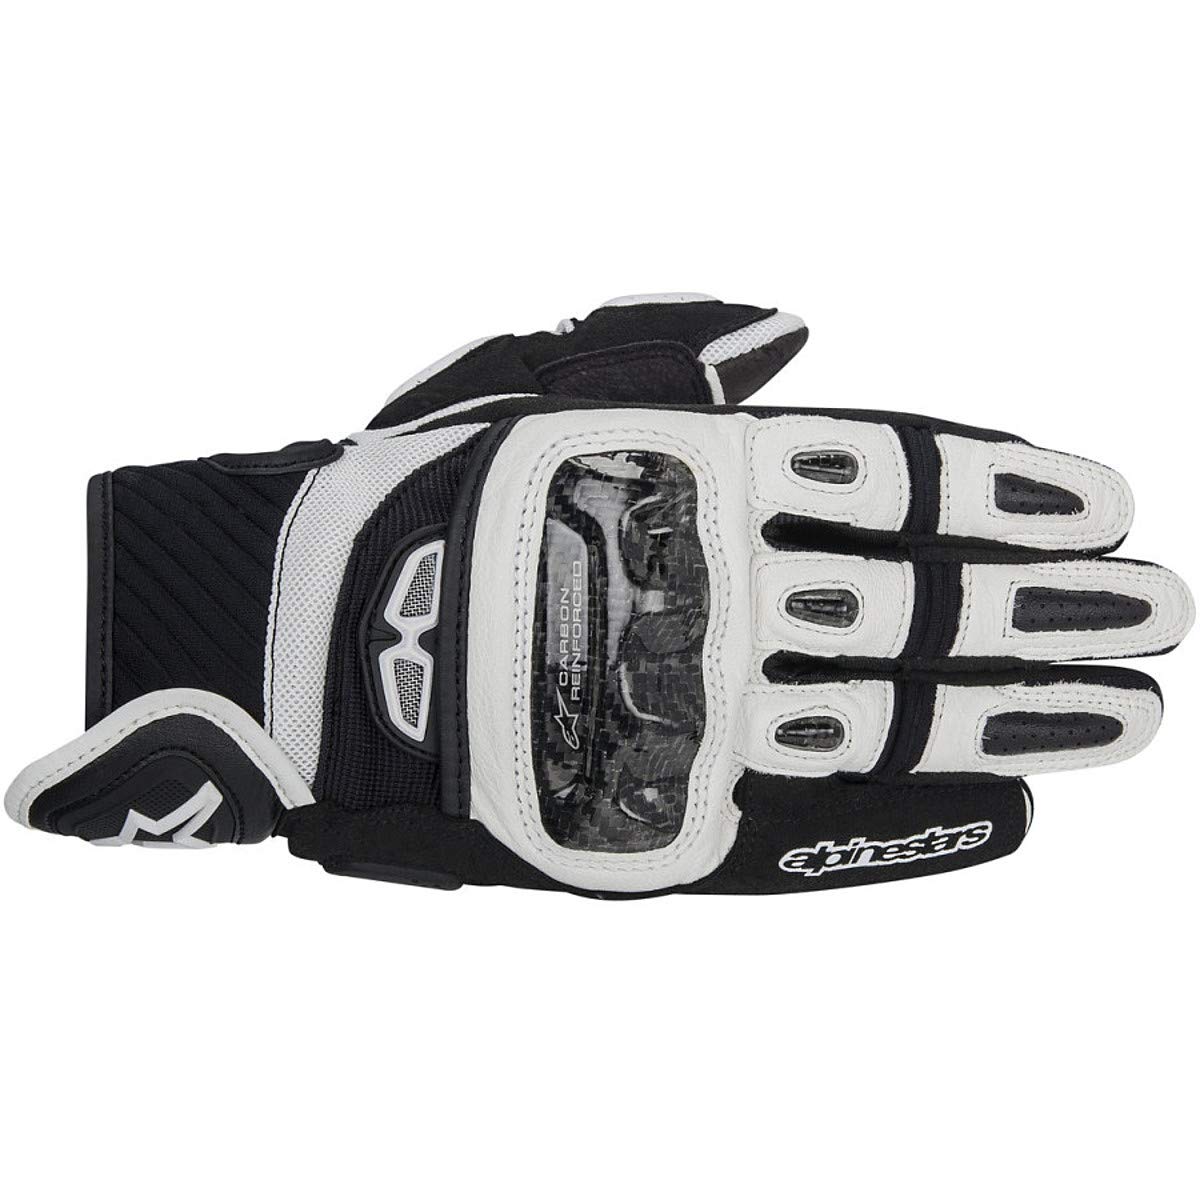 Alpinestars Men's 3567914-12-S Gloves (Black/White, Small)